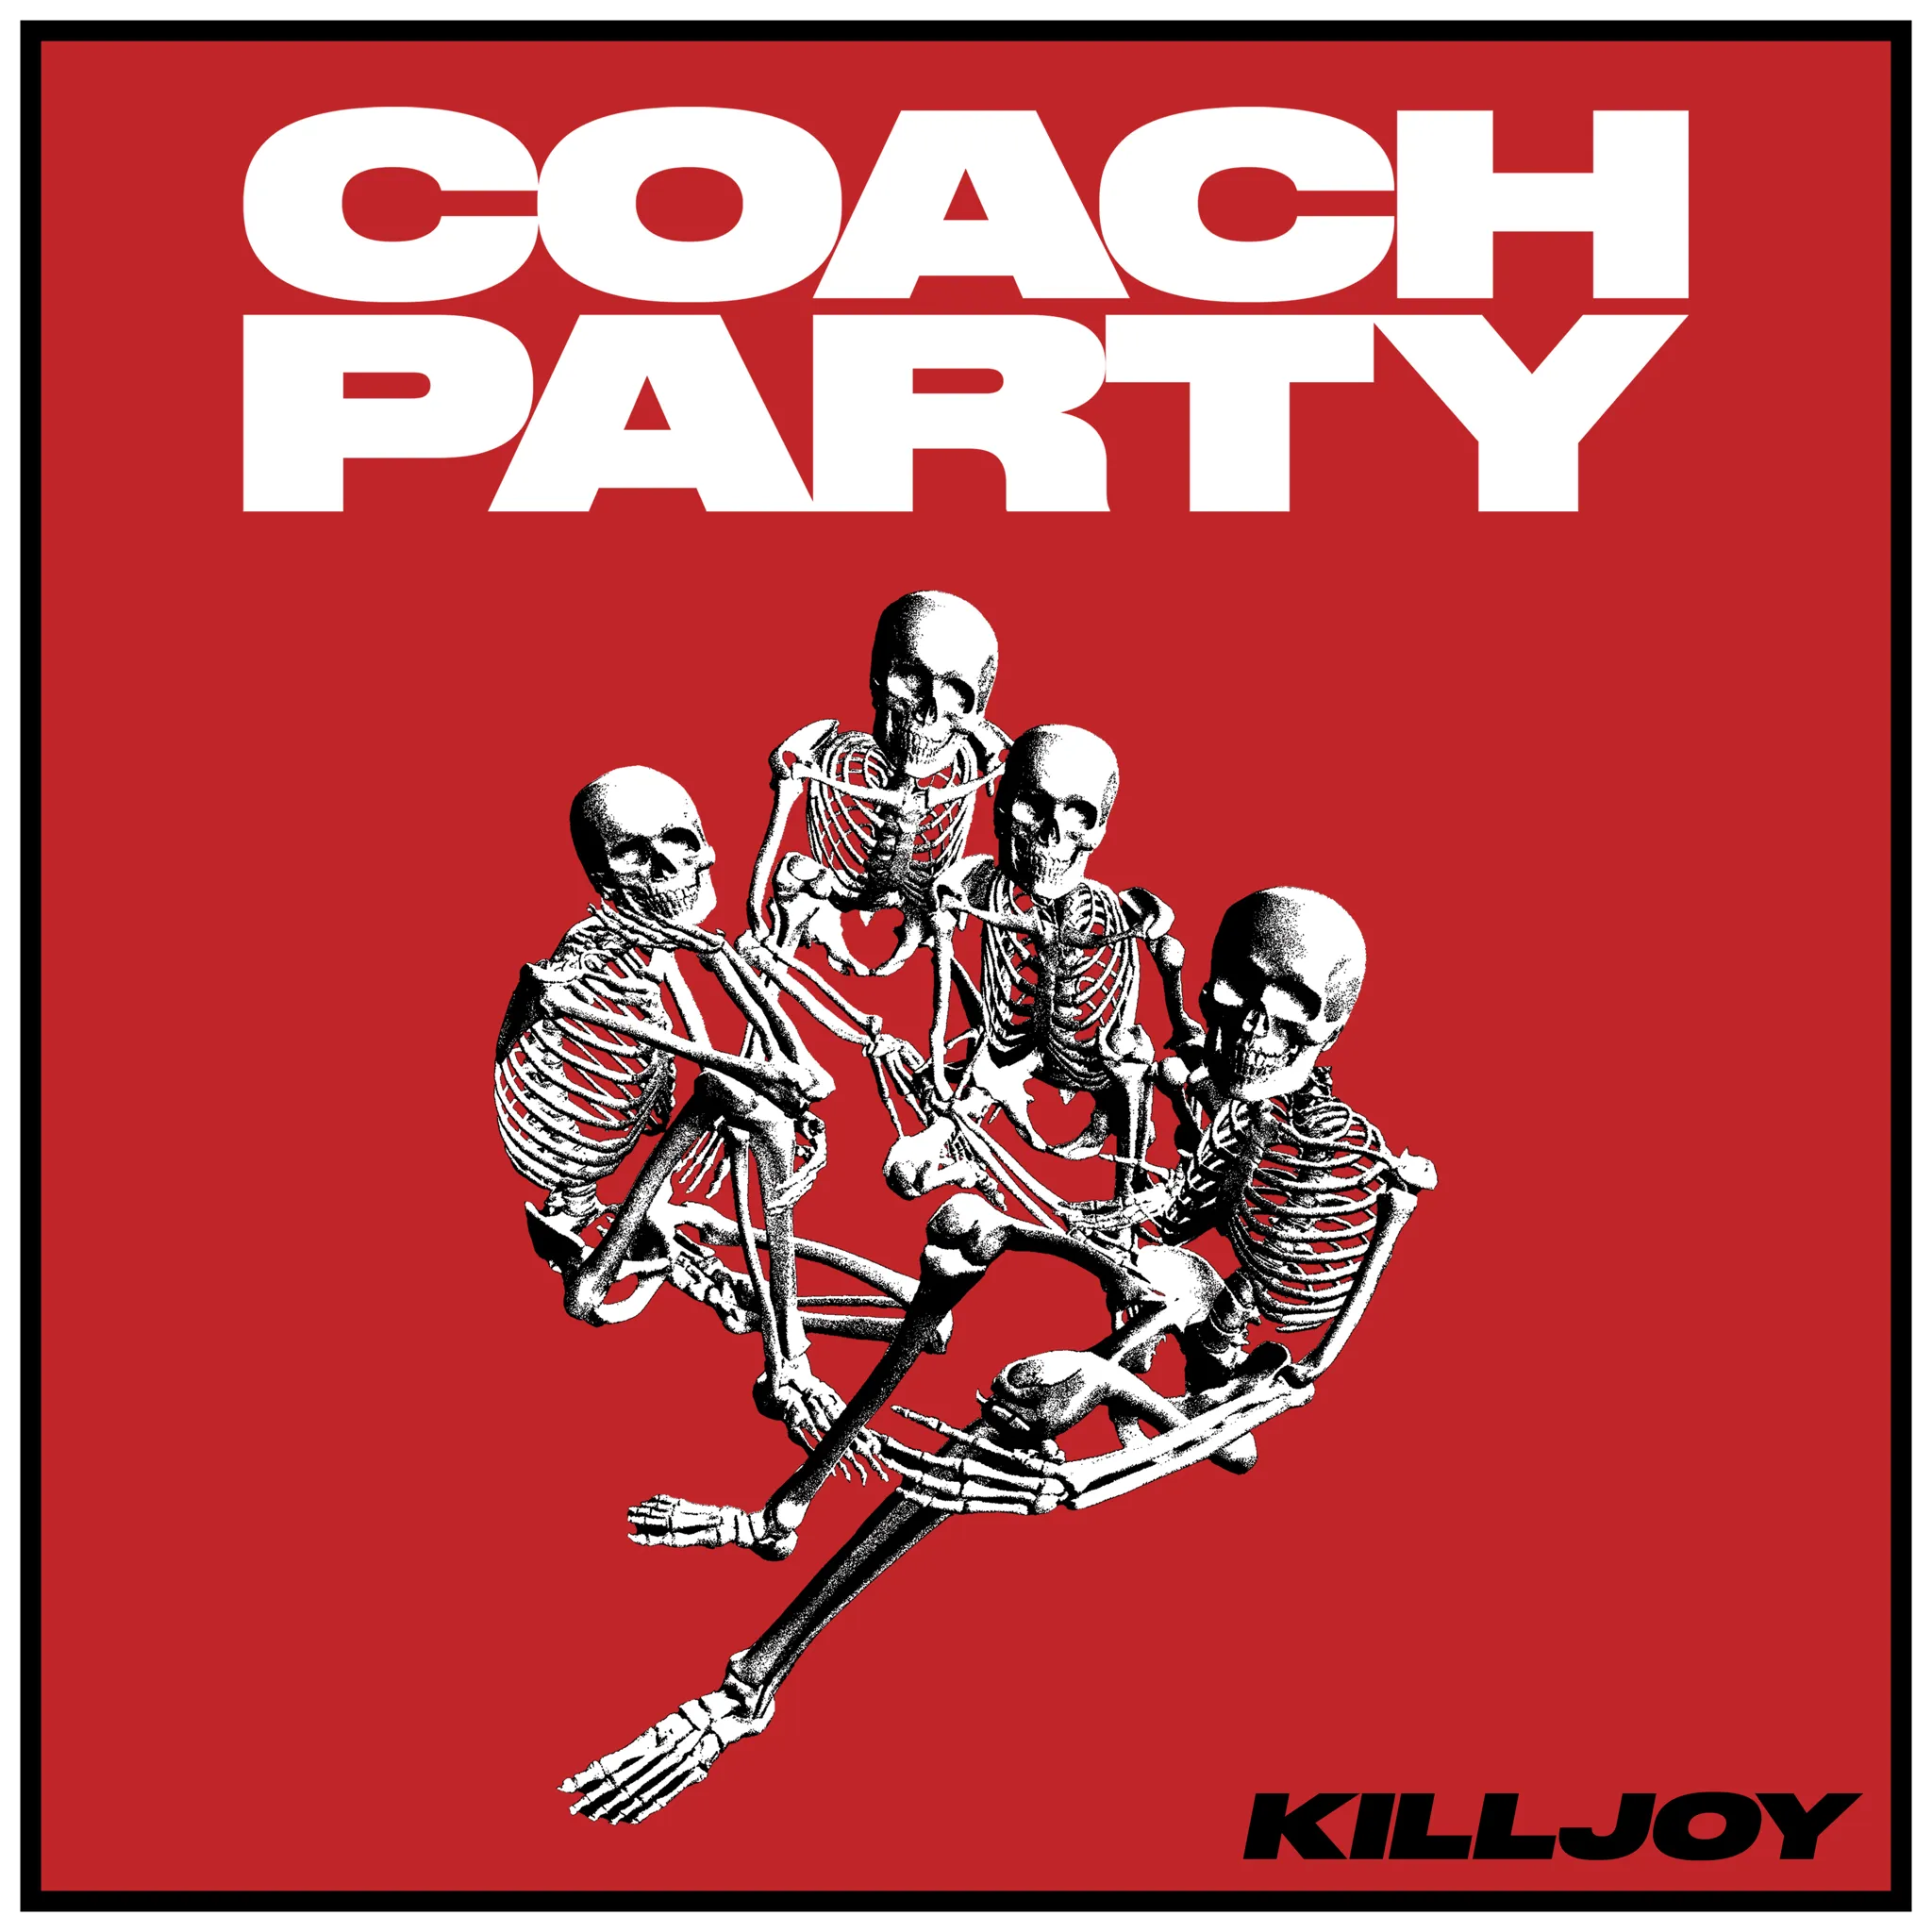 <strong>Coach Party - Killjoy</strong> (Vinyl LP - black)